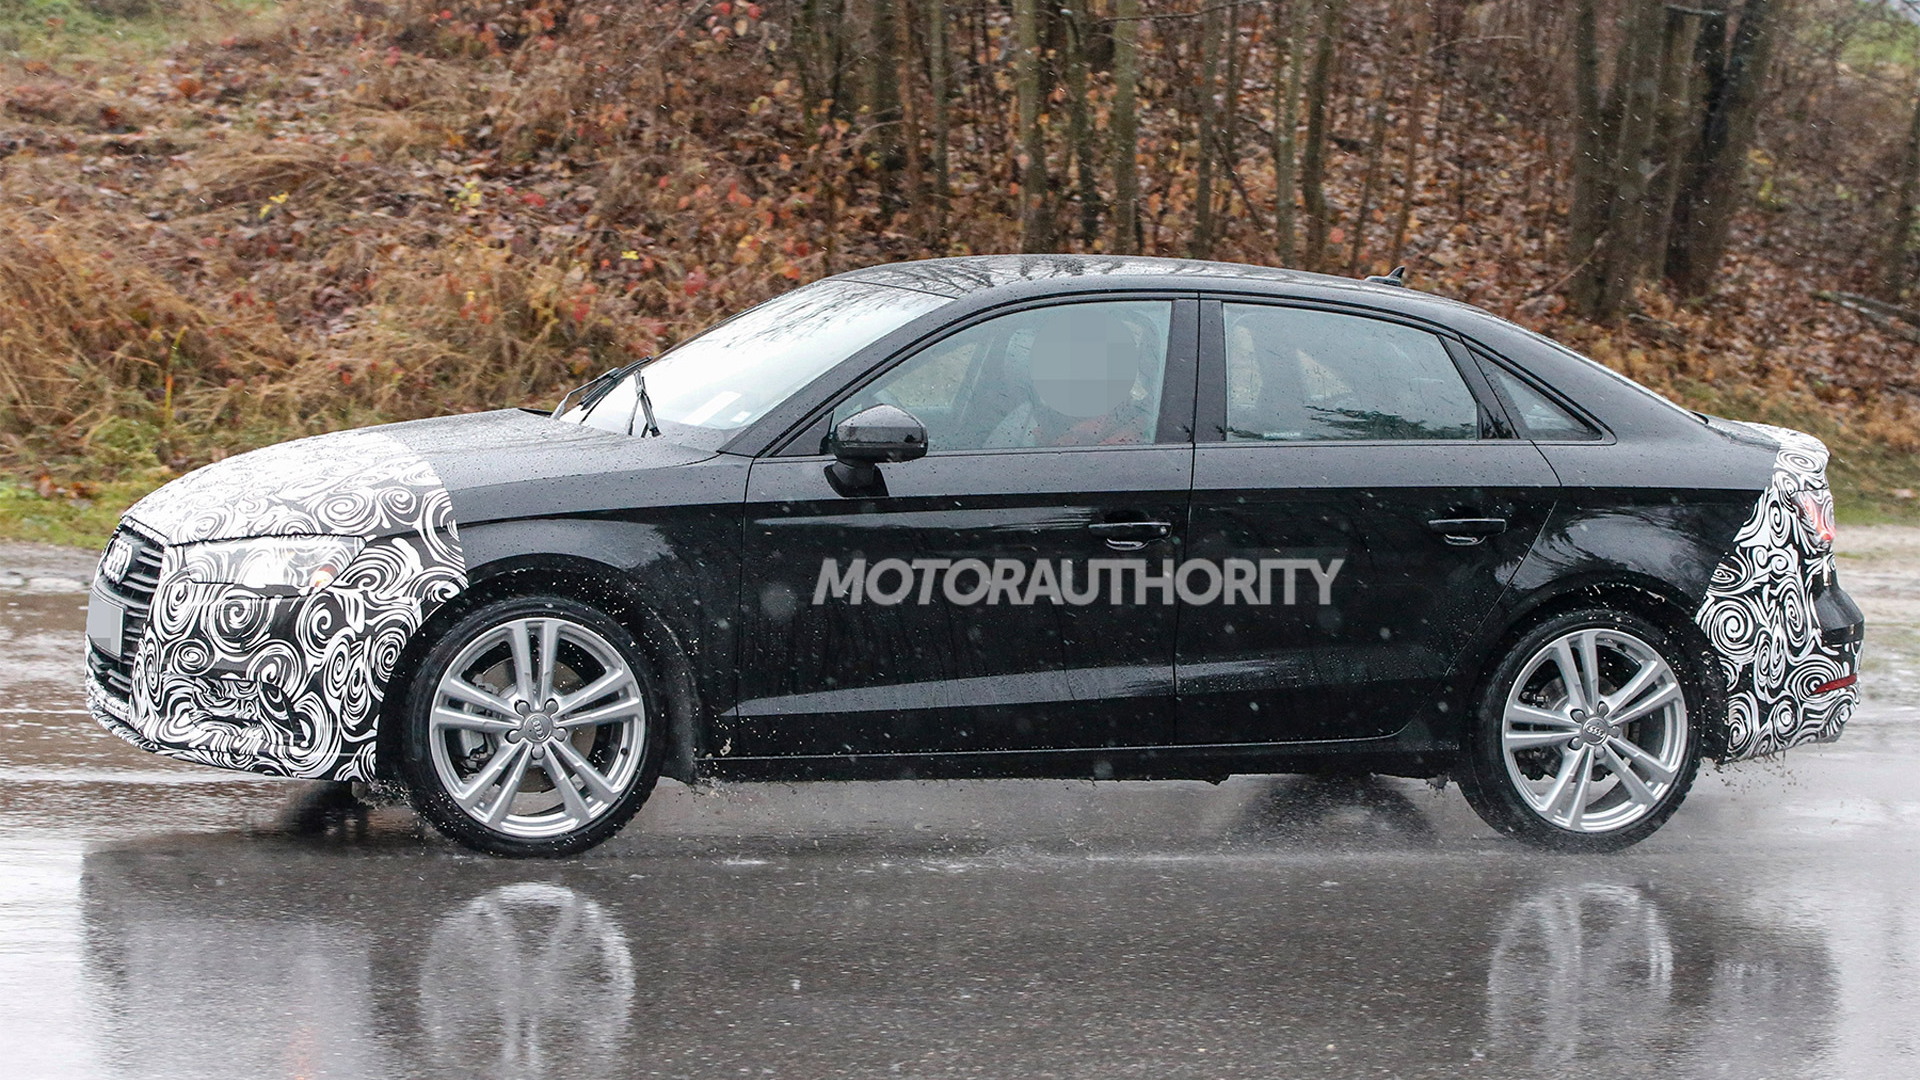 2018 Audi A3 facelift spy shots - Image via S. Baldauf/SB-Medien